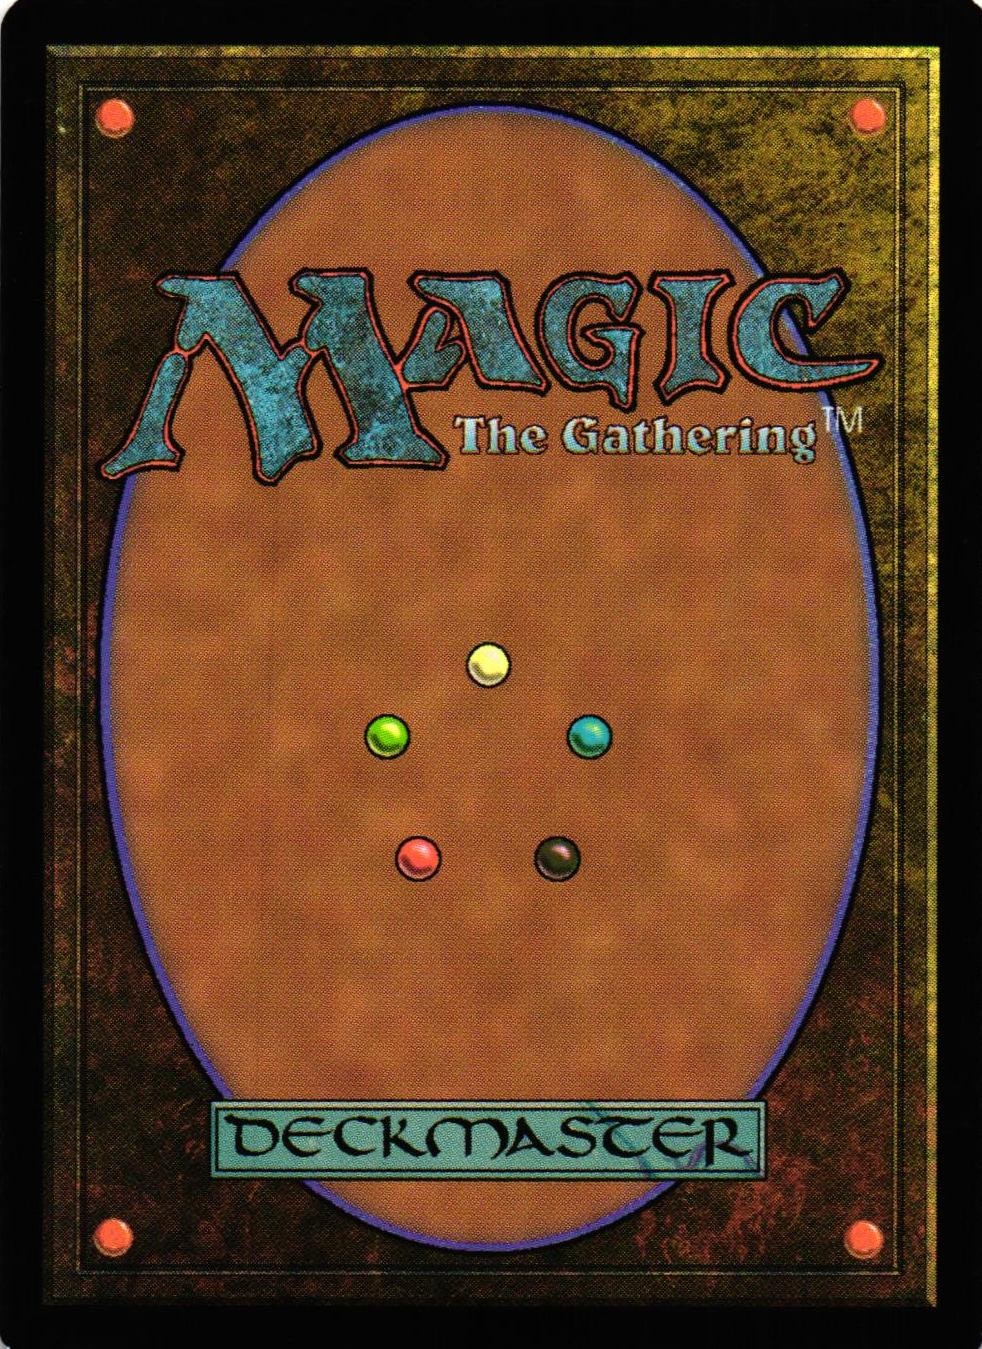 Deadbridge Shaman Common 091/272 Magic Origins (ORI) Magic the Gathering